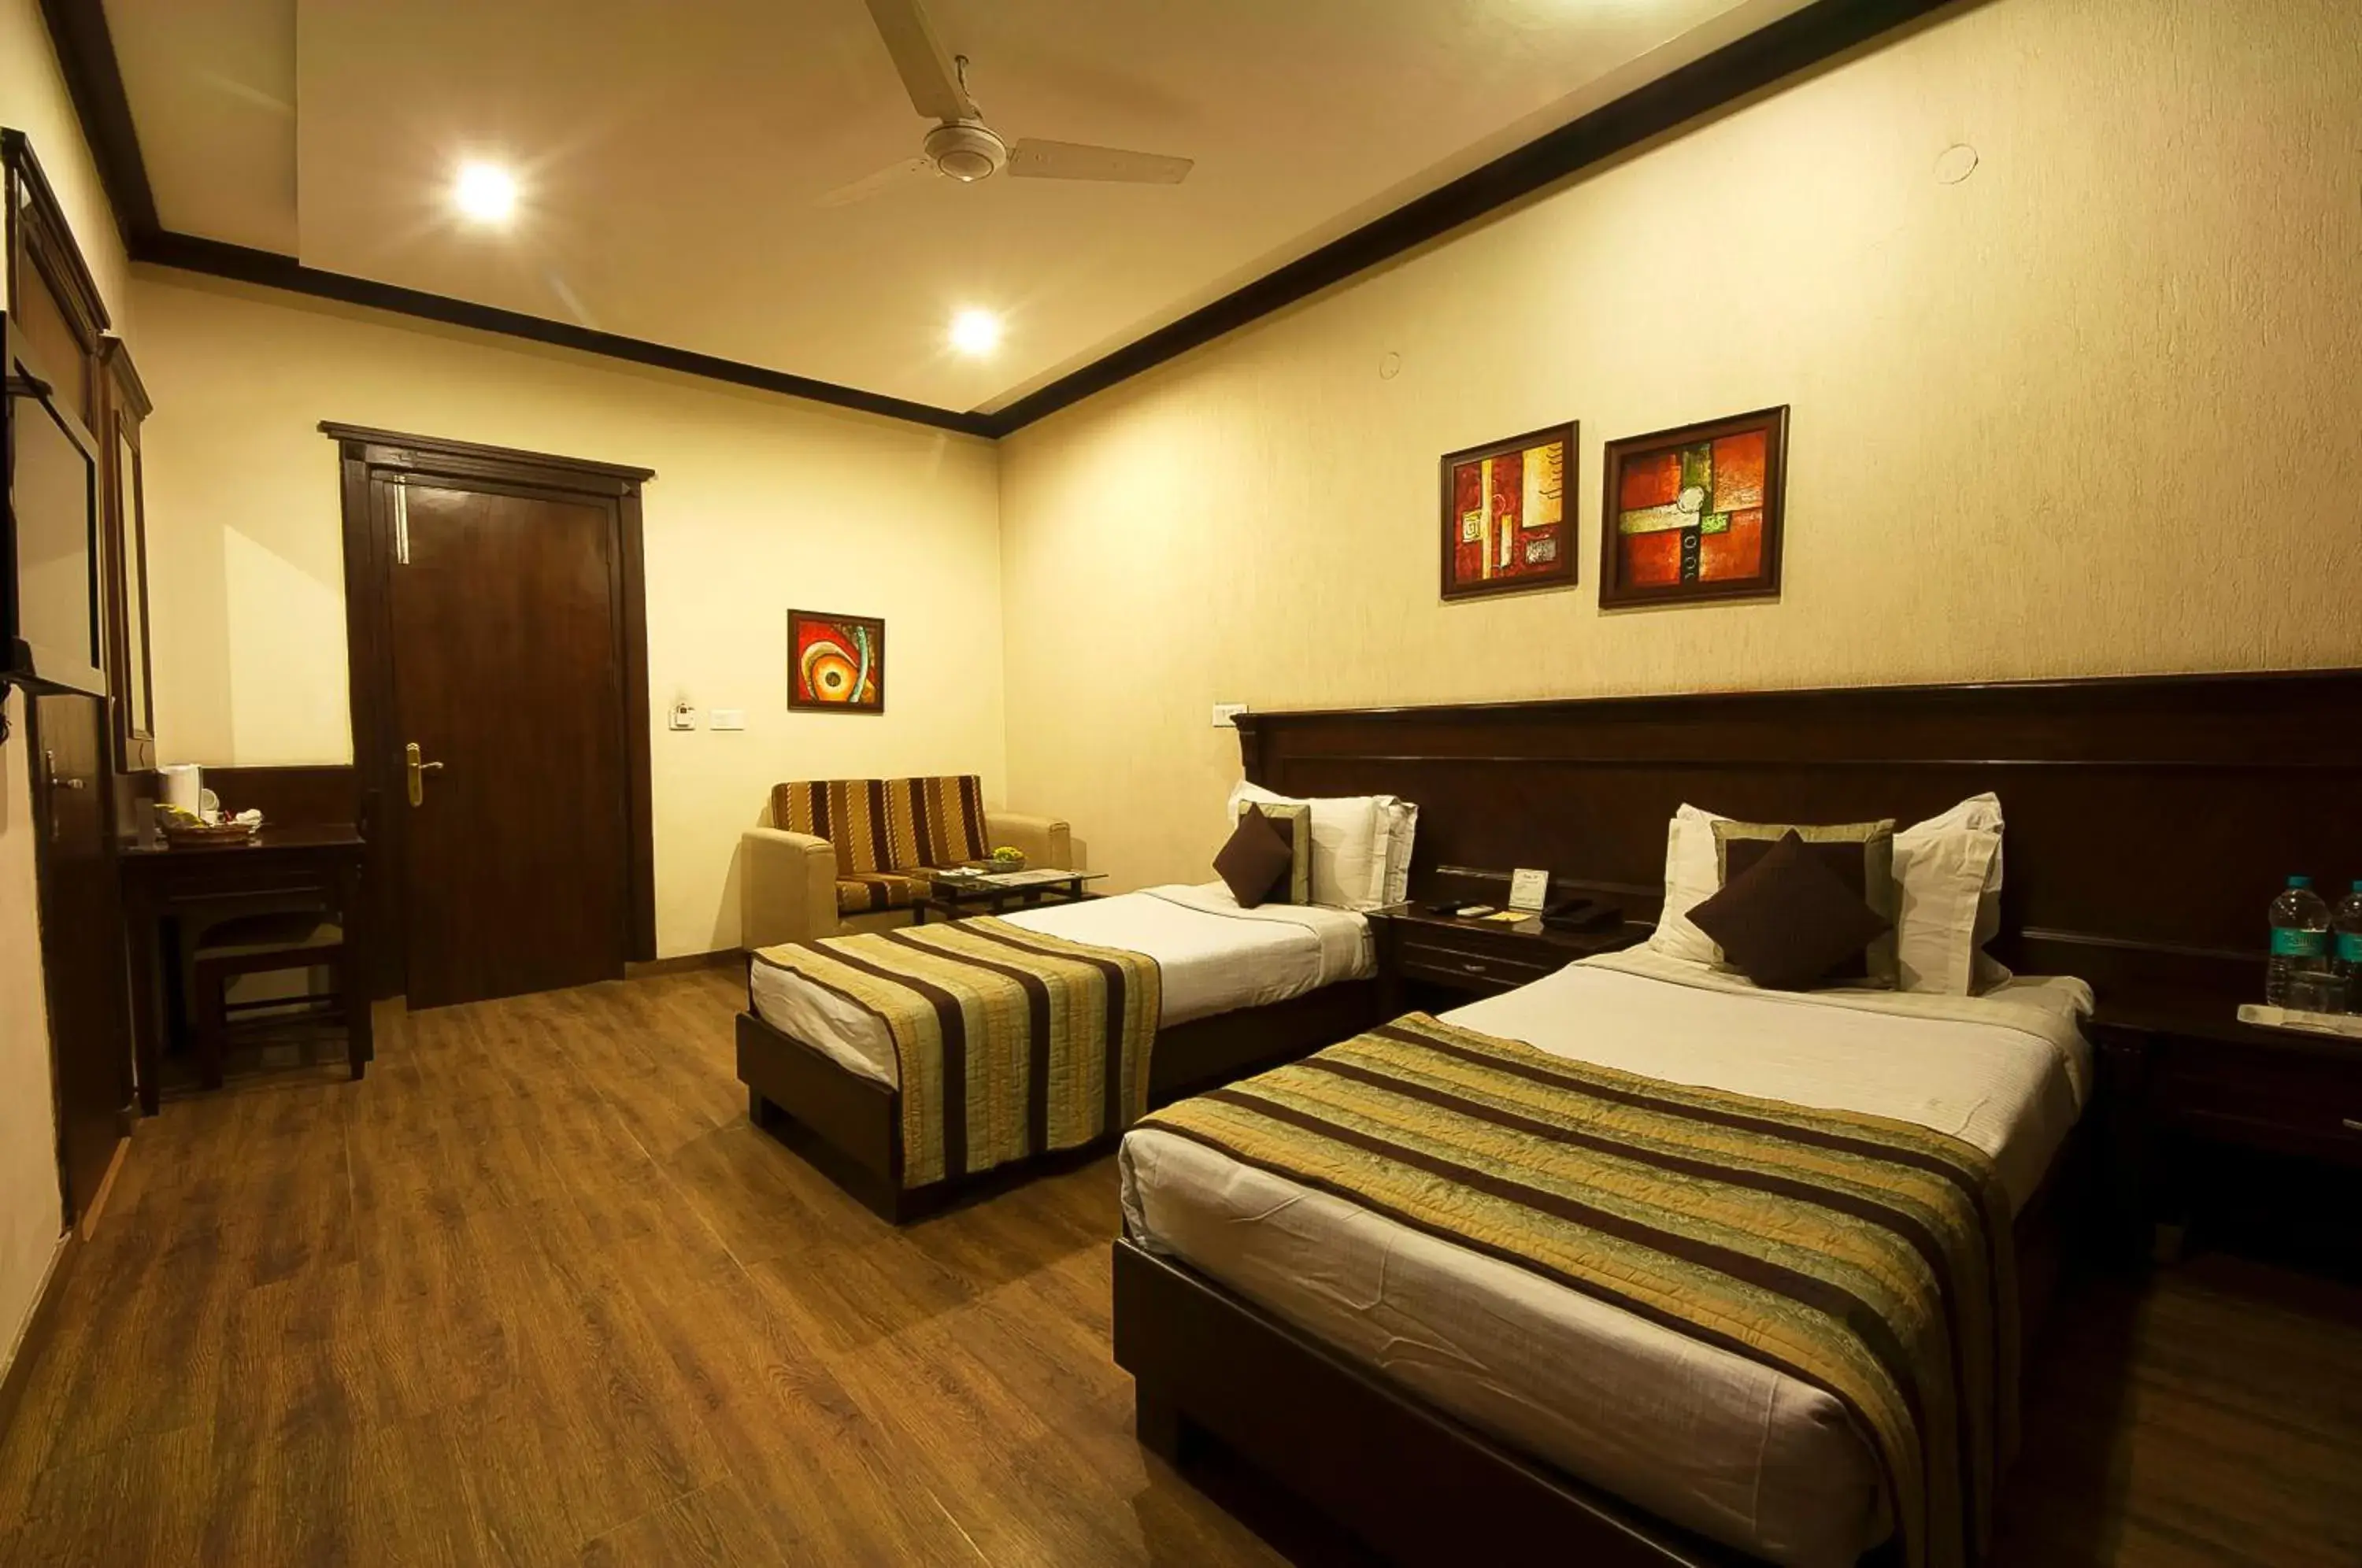 Bed, Room Photo in Siris 18 Hotel Gurgaon